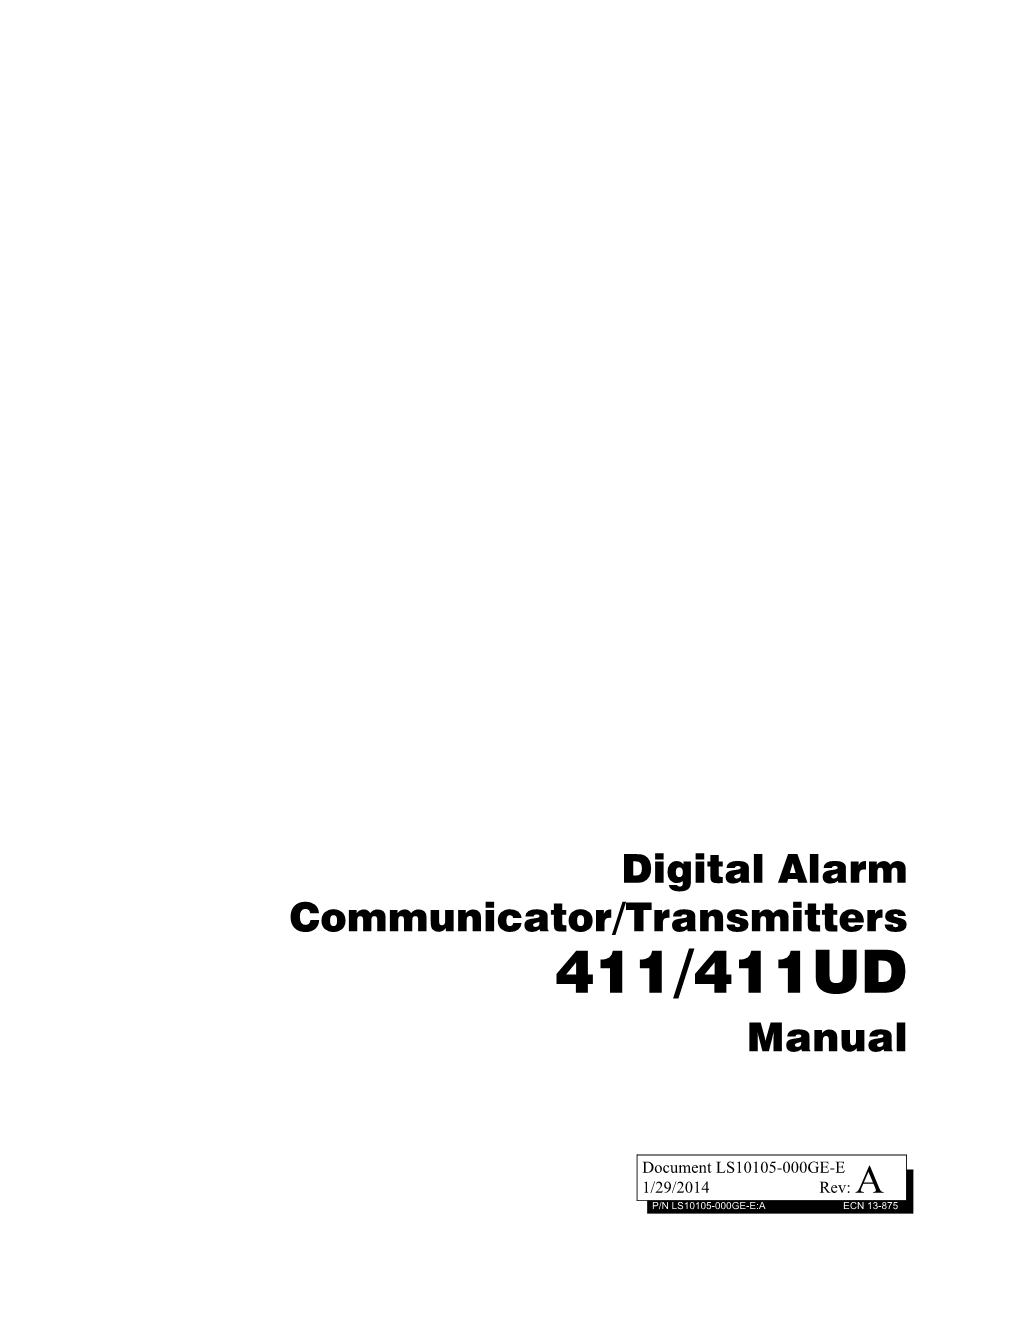 Digital Alarm Communicator/Transmitters 411/411UD Manual